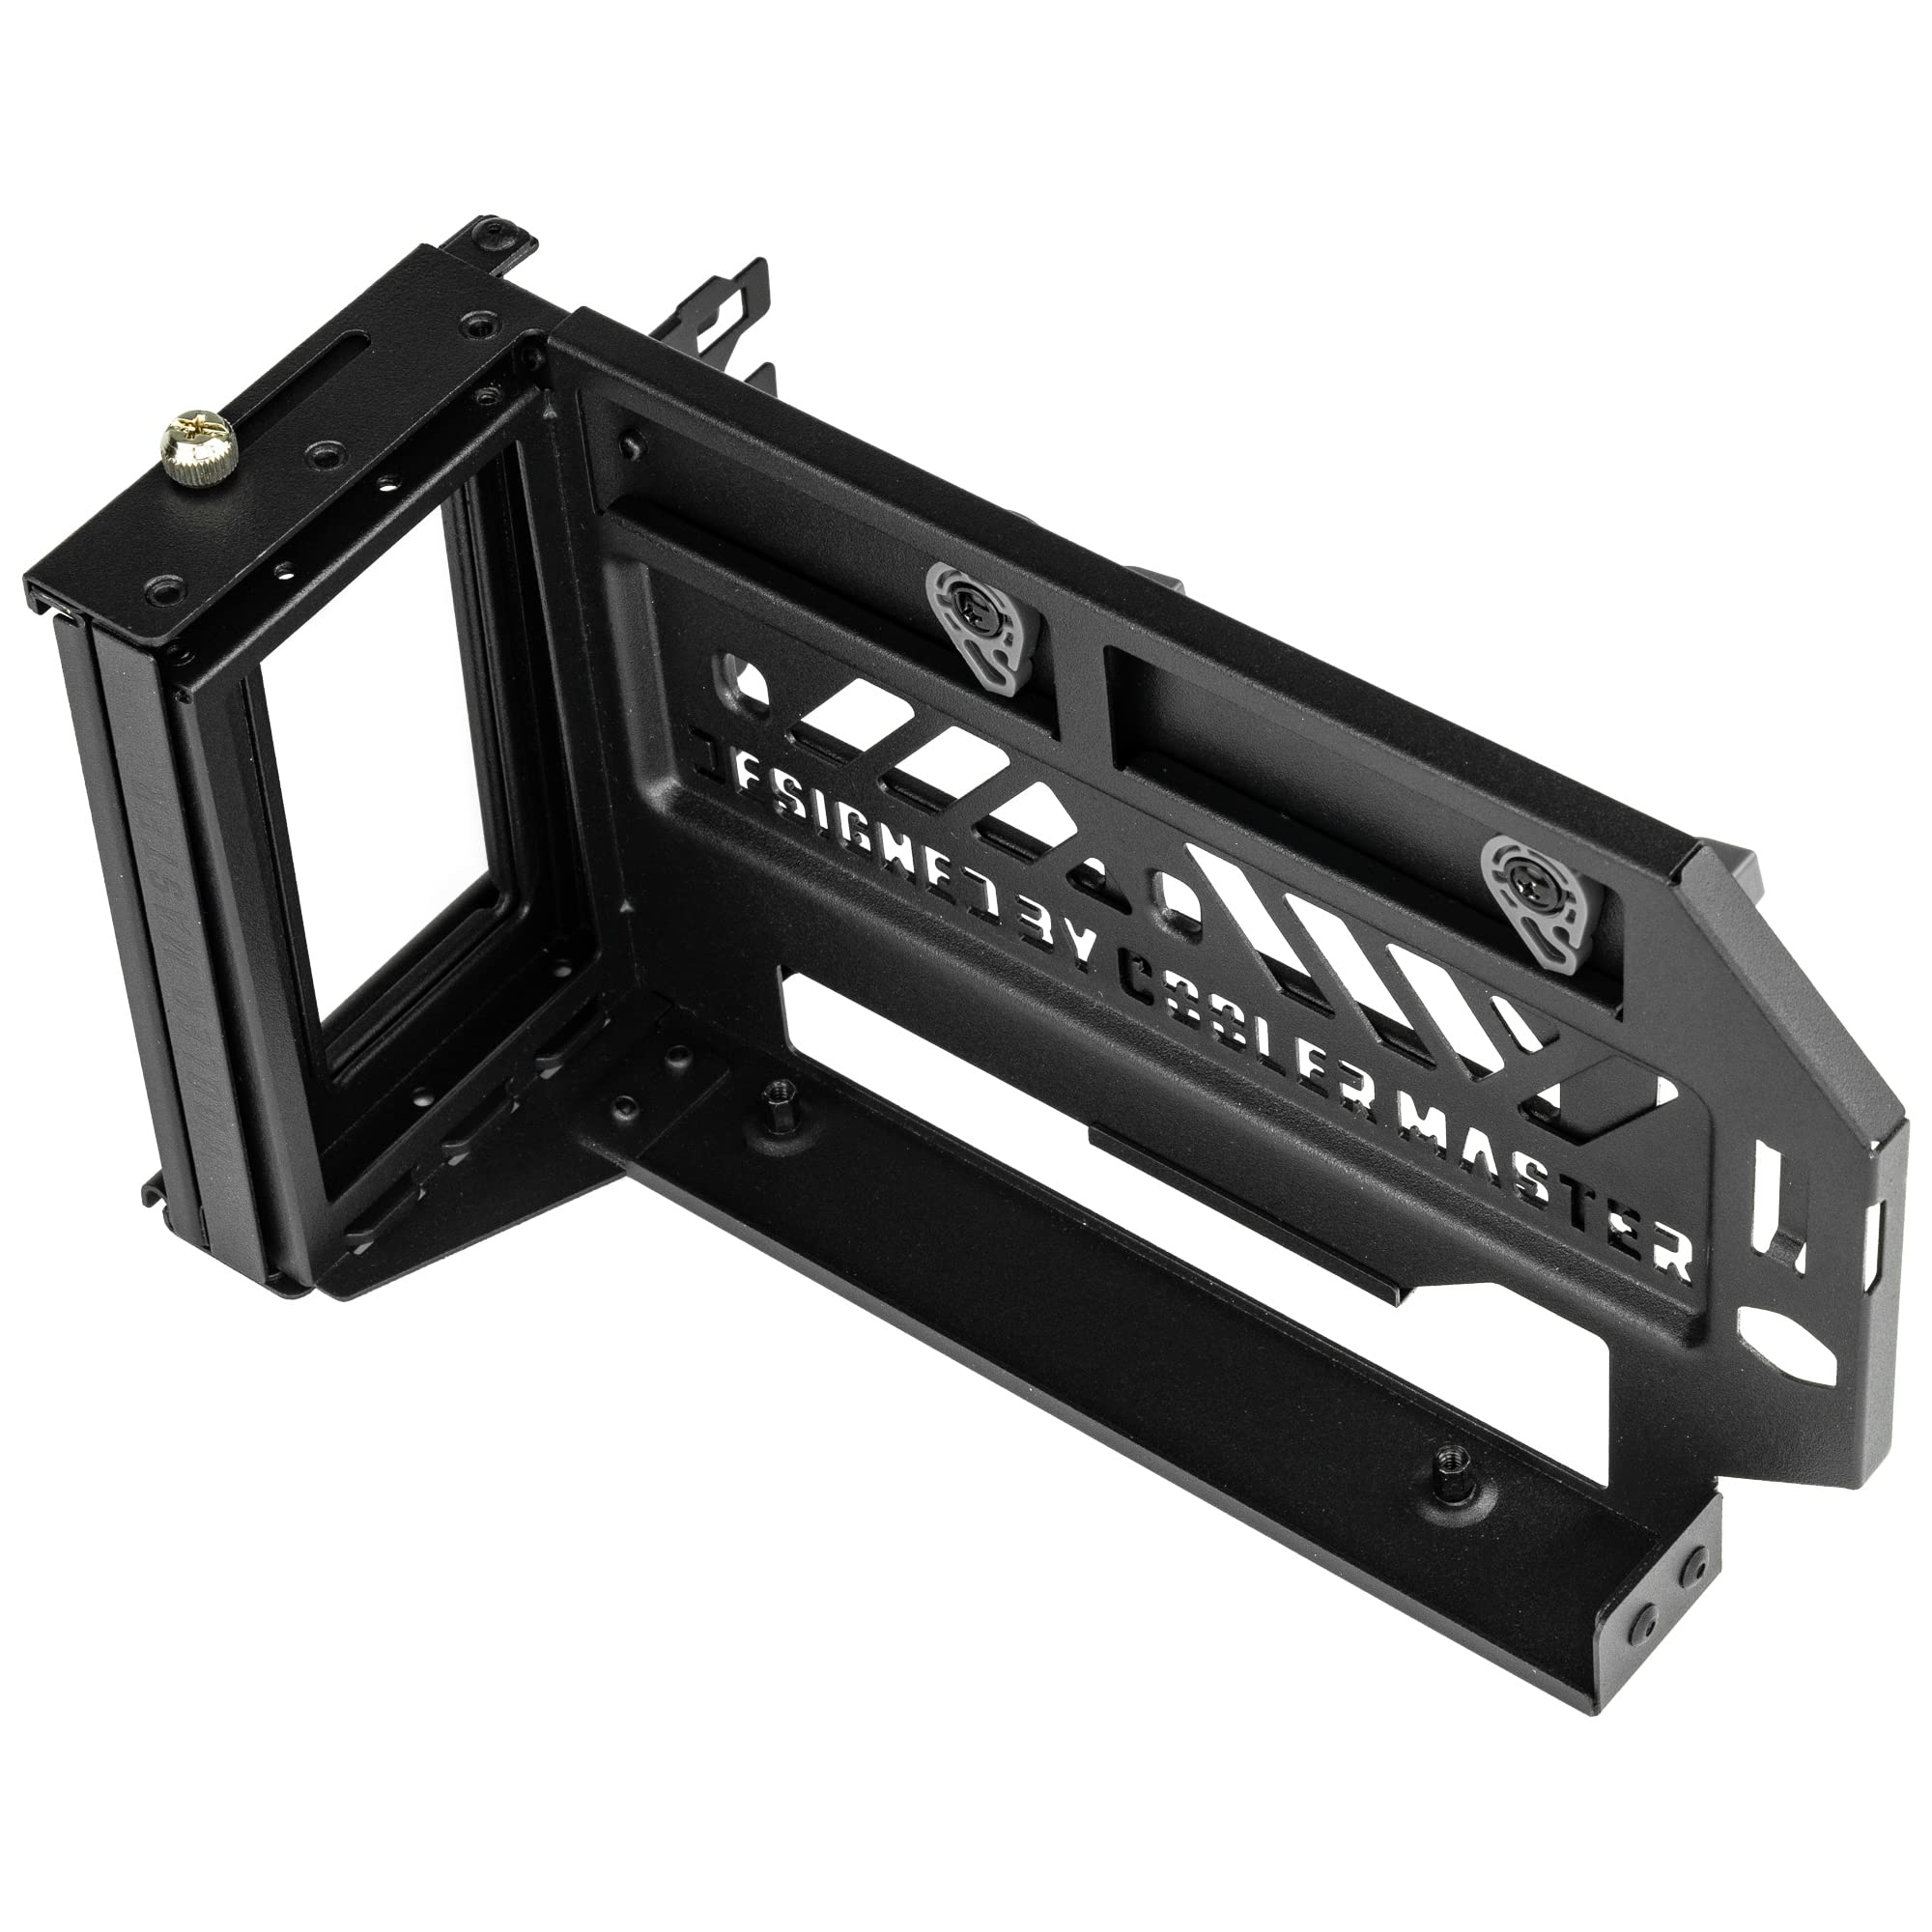 Soporte Para Gpu Cooler Master Kit V3 Color Negro Pcie 40 Incluye Cable Pcie Mca U000R Kfvk03 - MCA-U000R-KFVK03